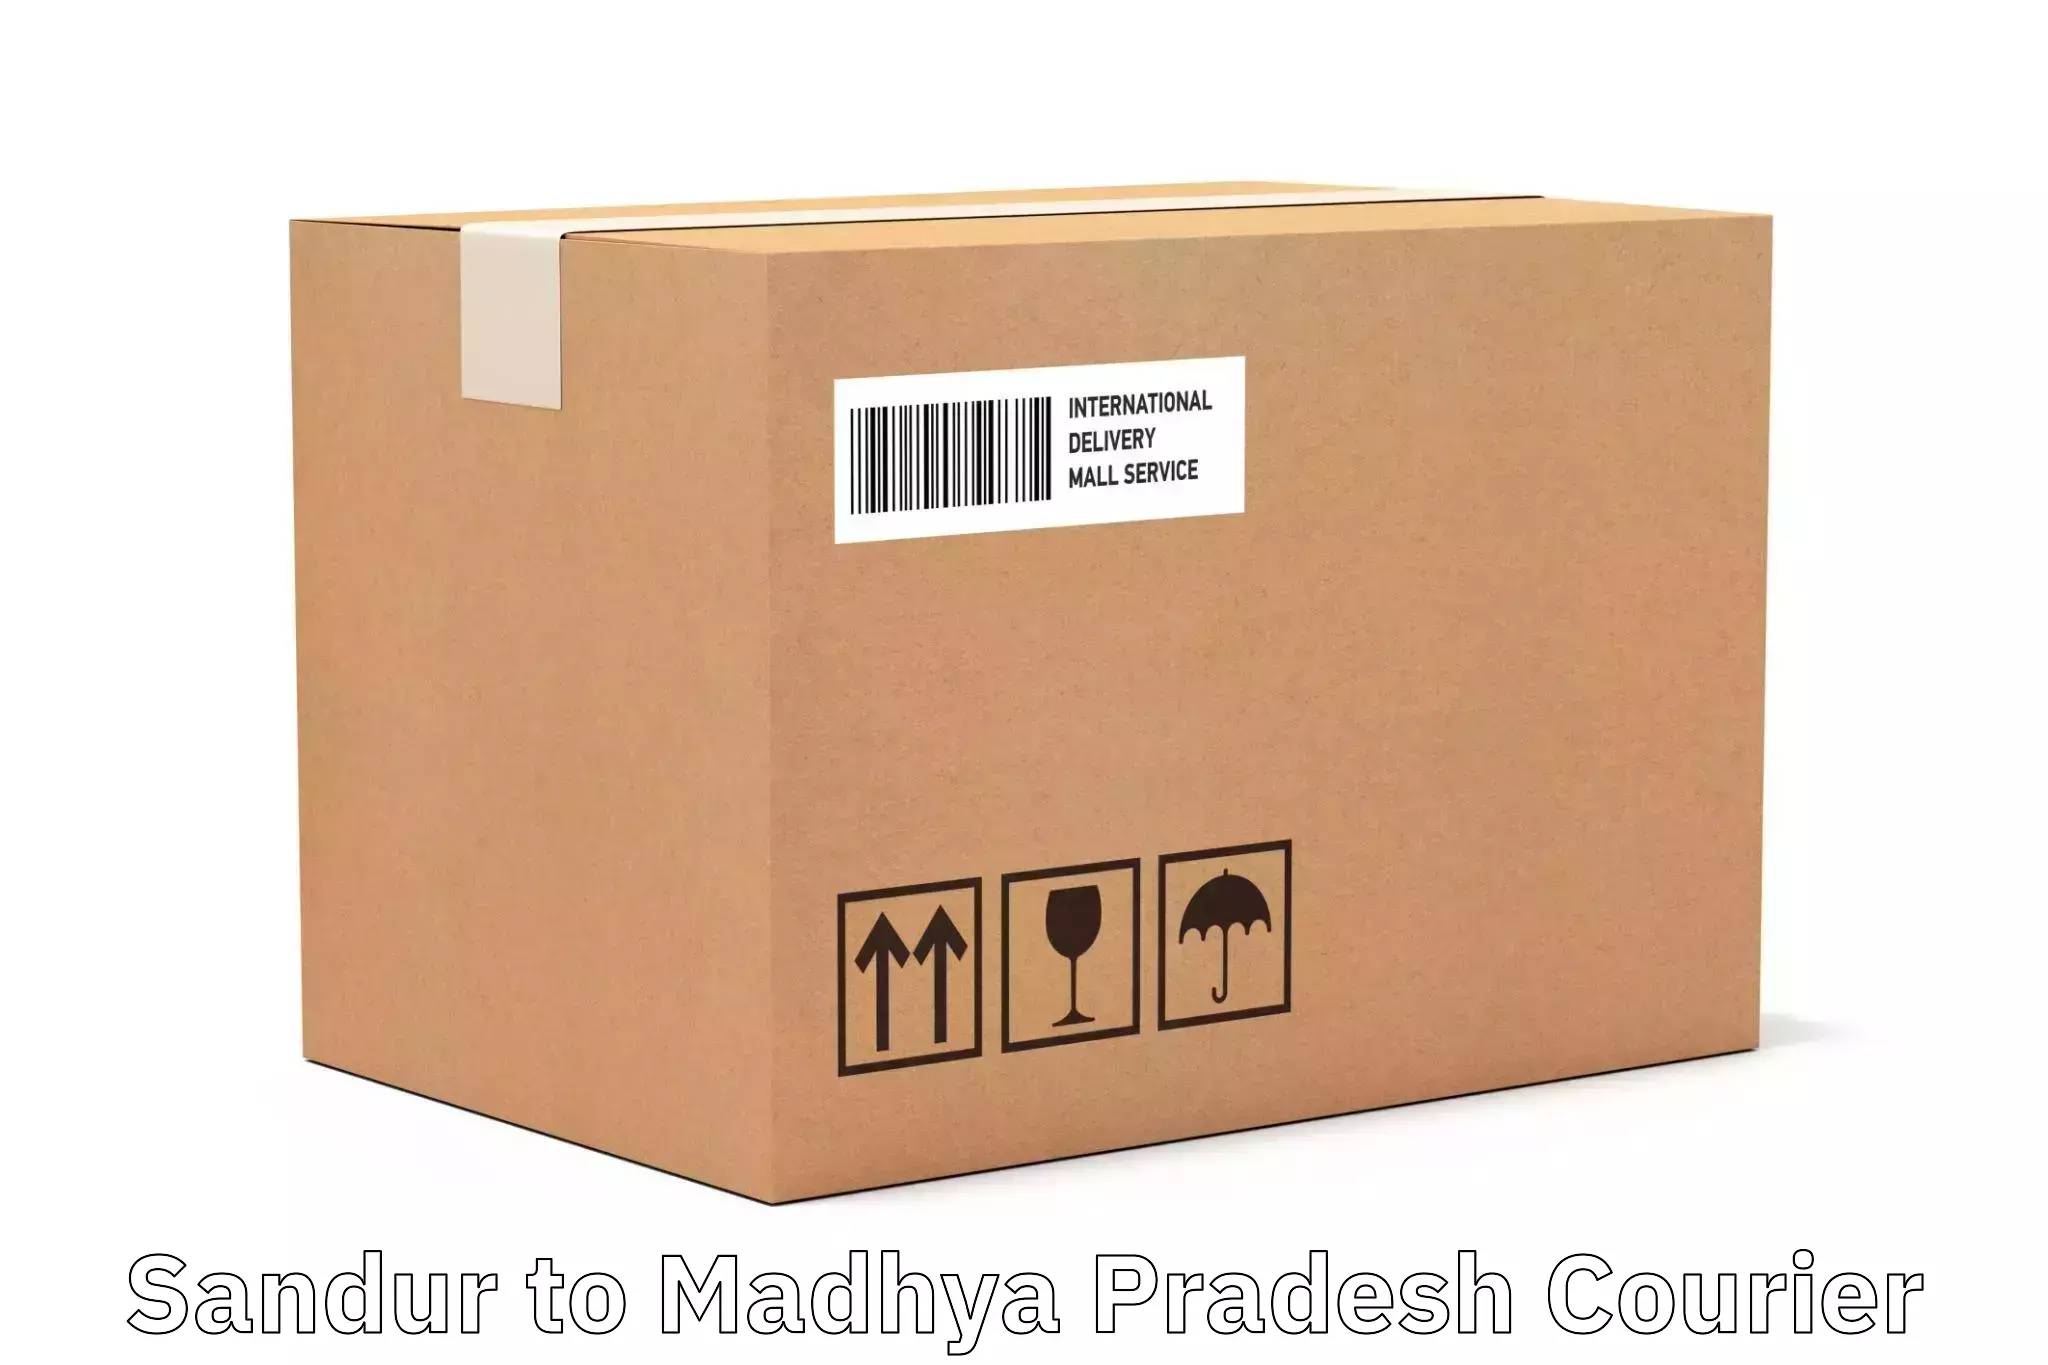 Same-day delivery options Sandur to Sendhwa